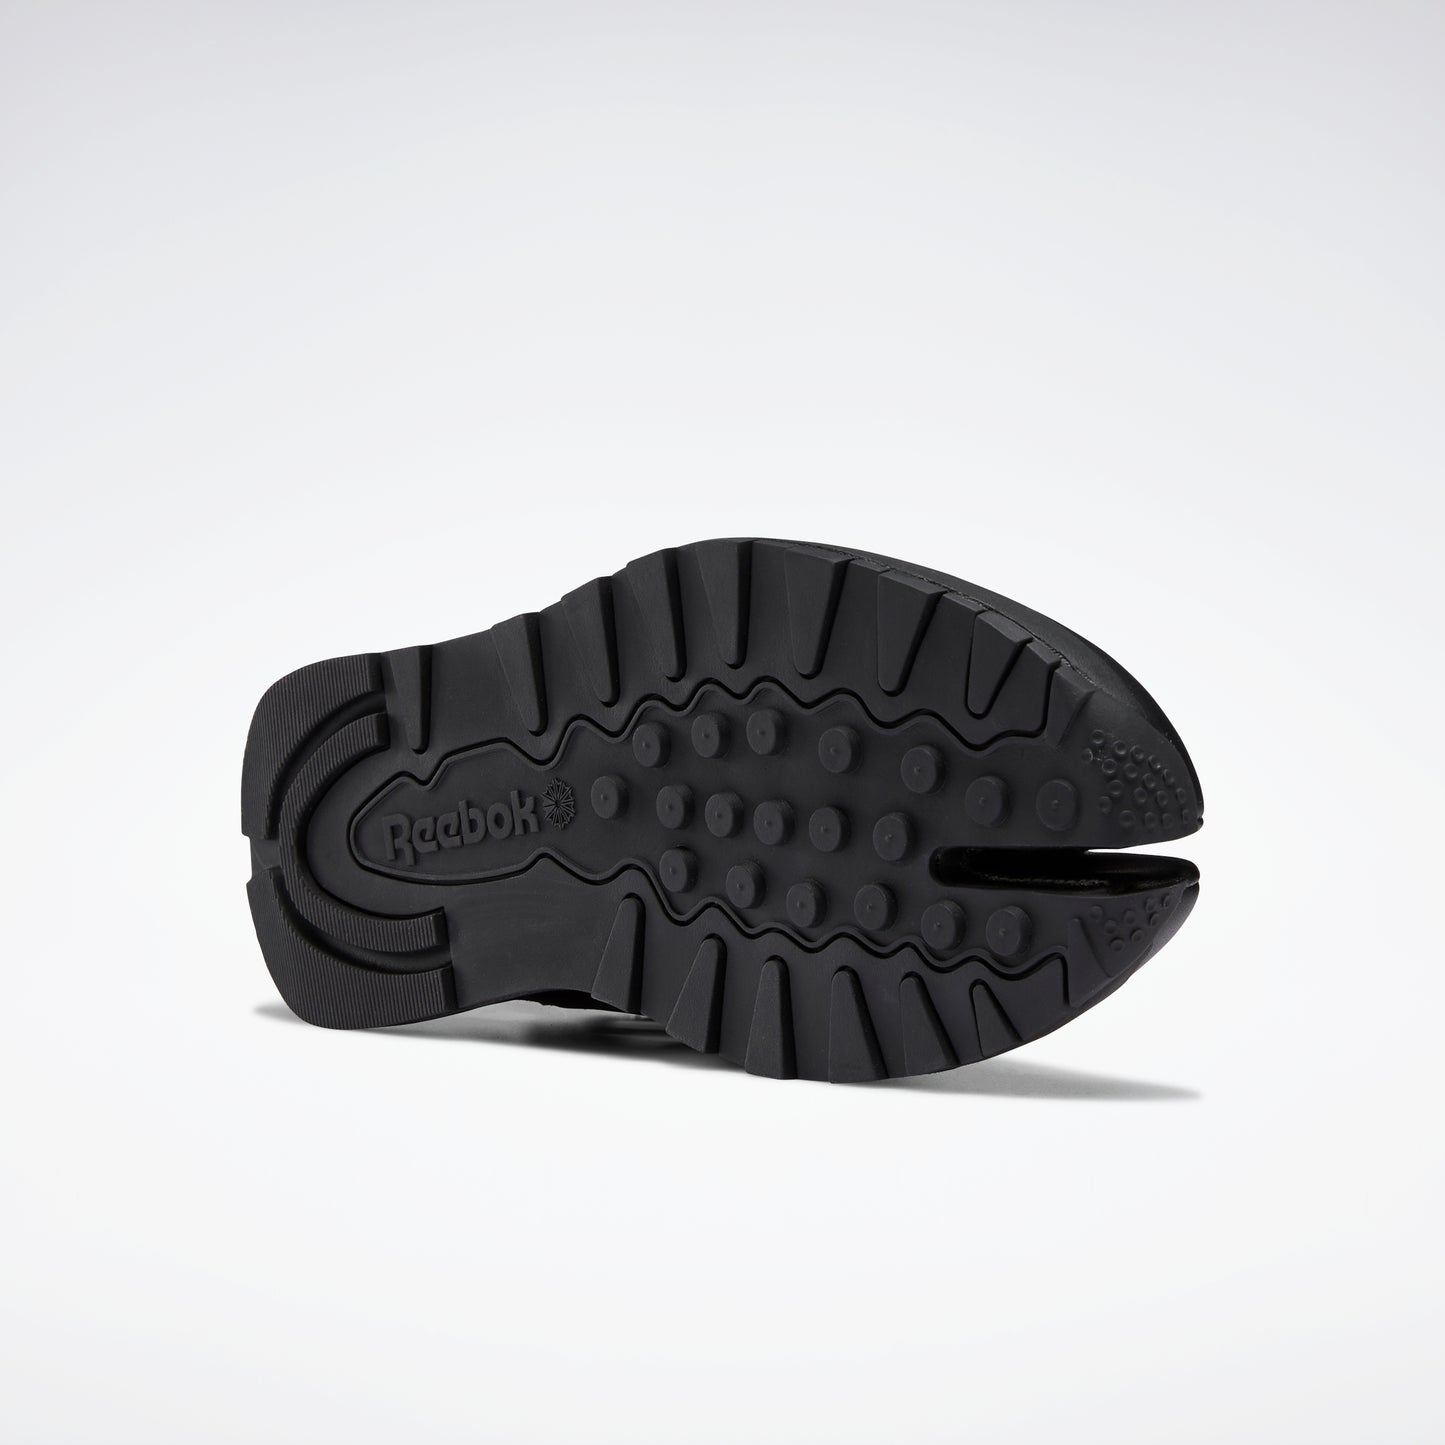 Reebok Footwear Men Maison Margiela Classic Leather Dq Shoes Black/Ftwwht/Black